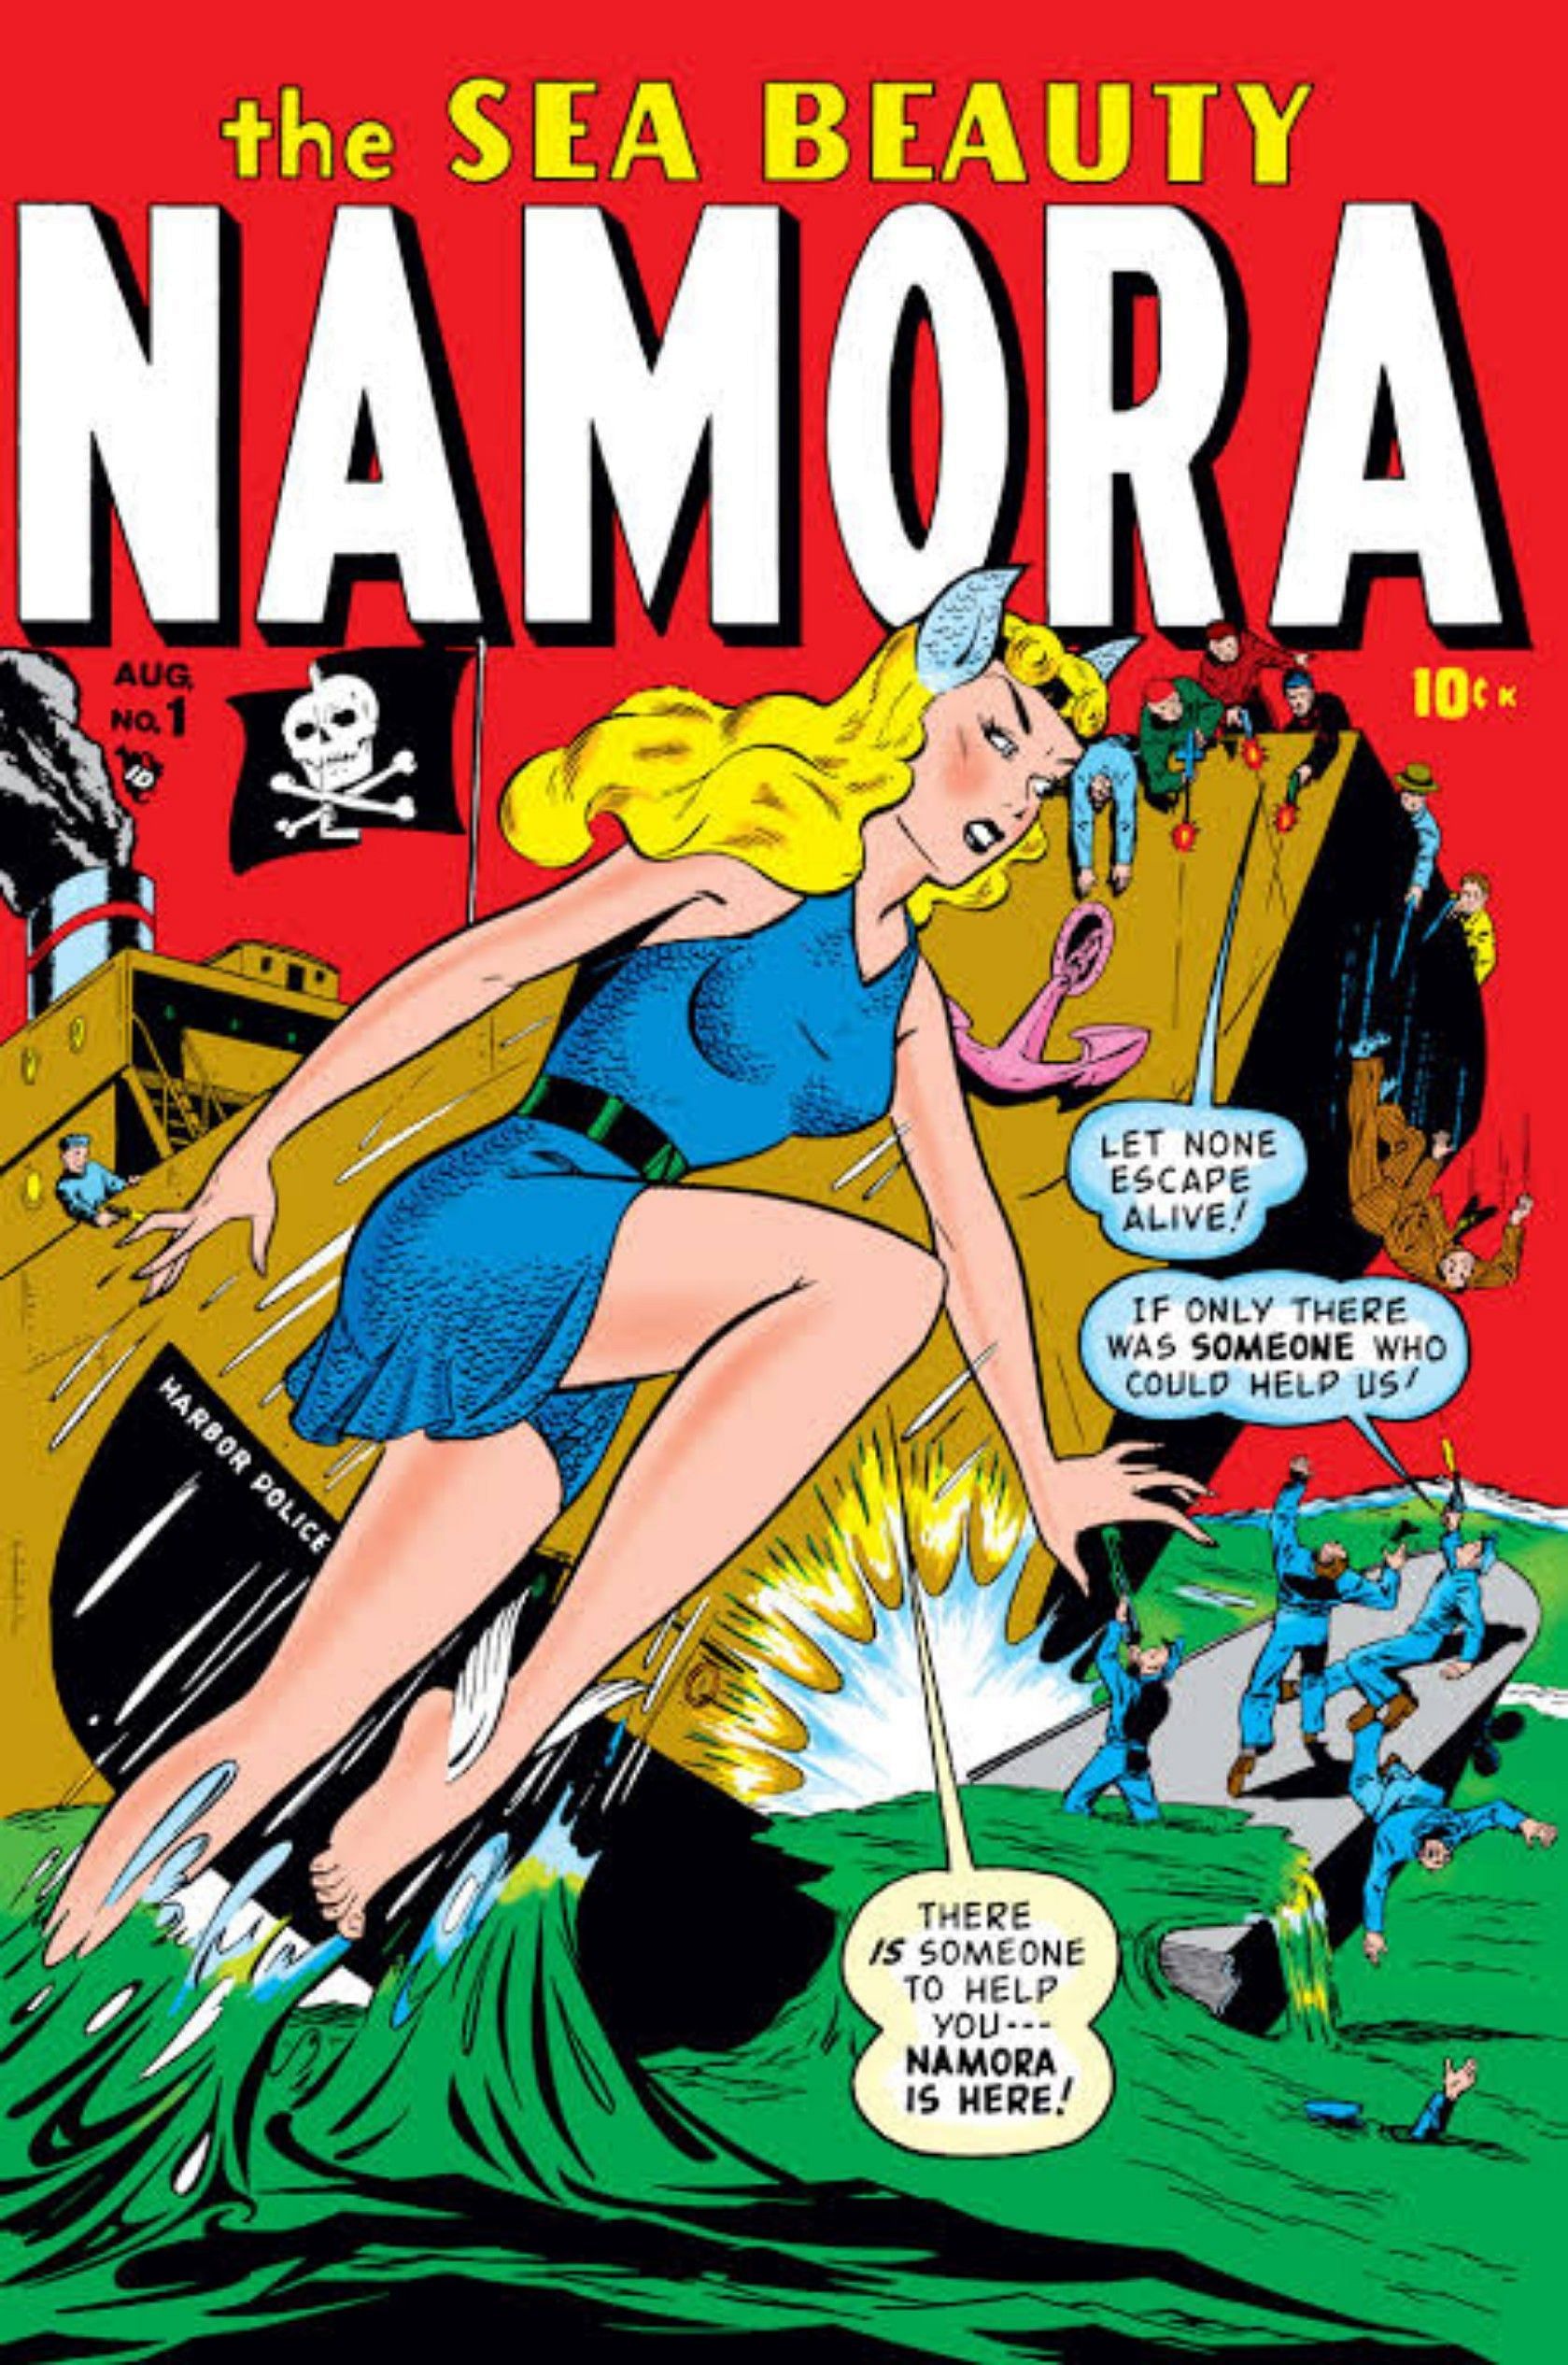 Namora in the comics (Image via Marvel Comics)